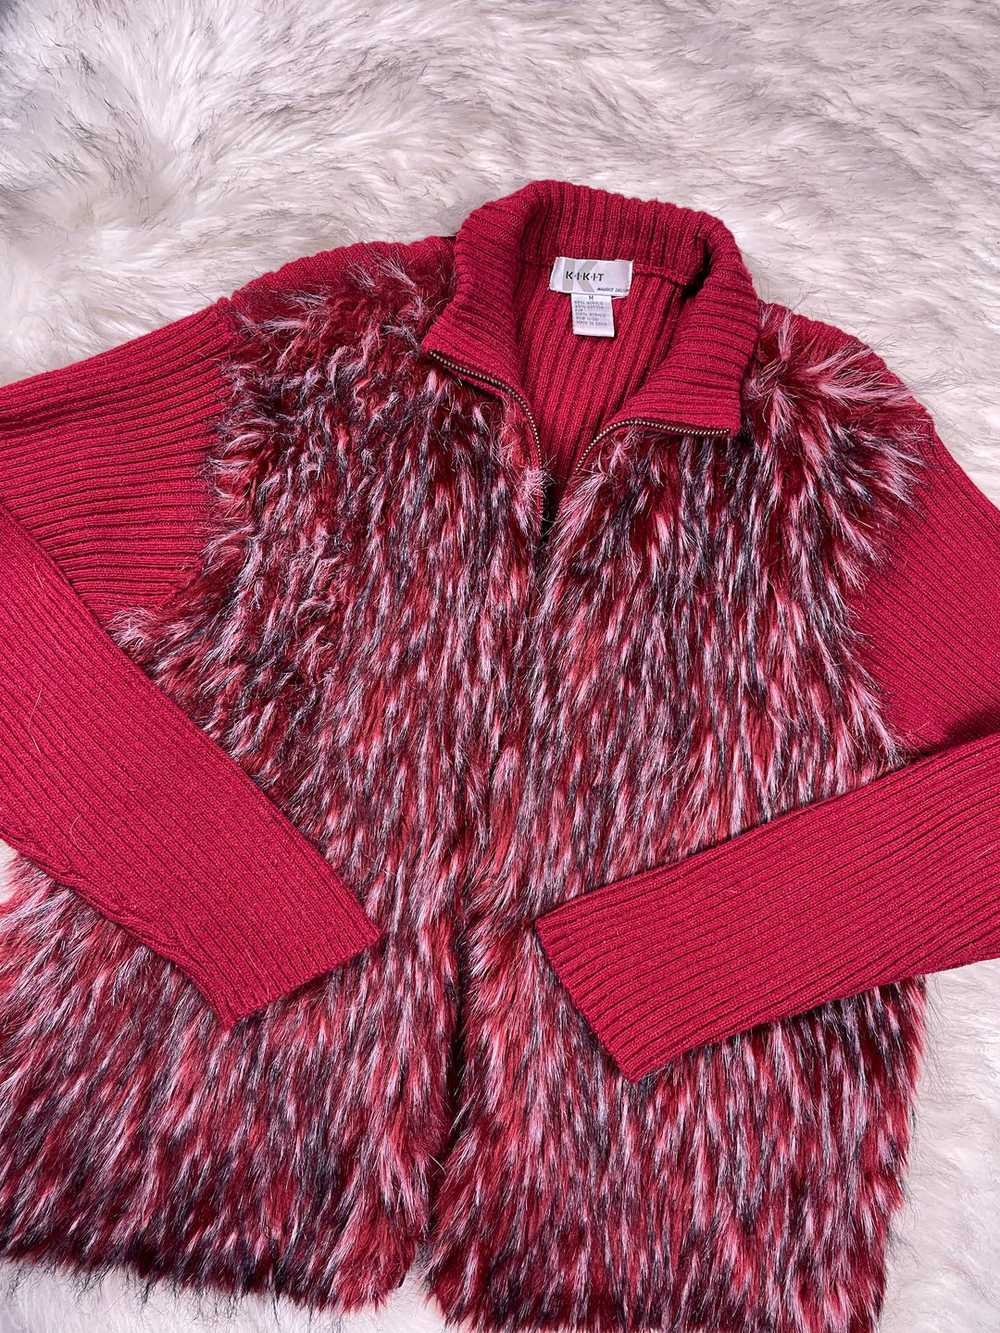 Y2k faux fur sweatshirt, Size M - image 2